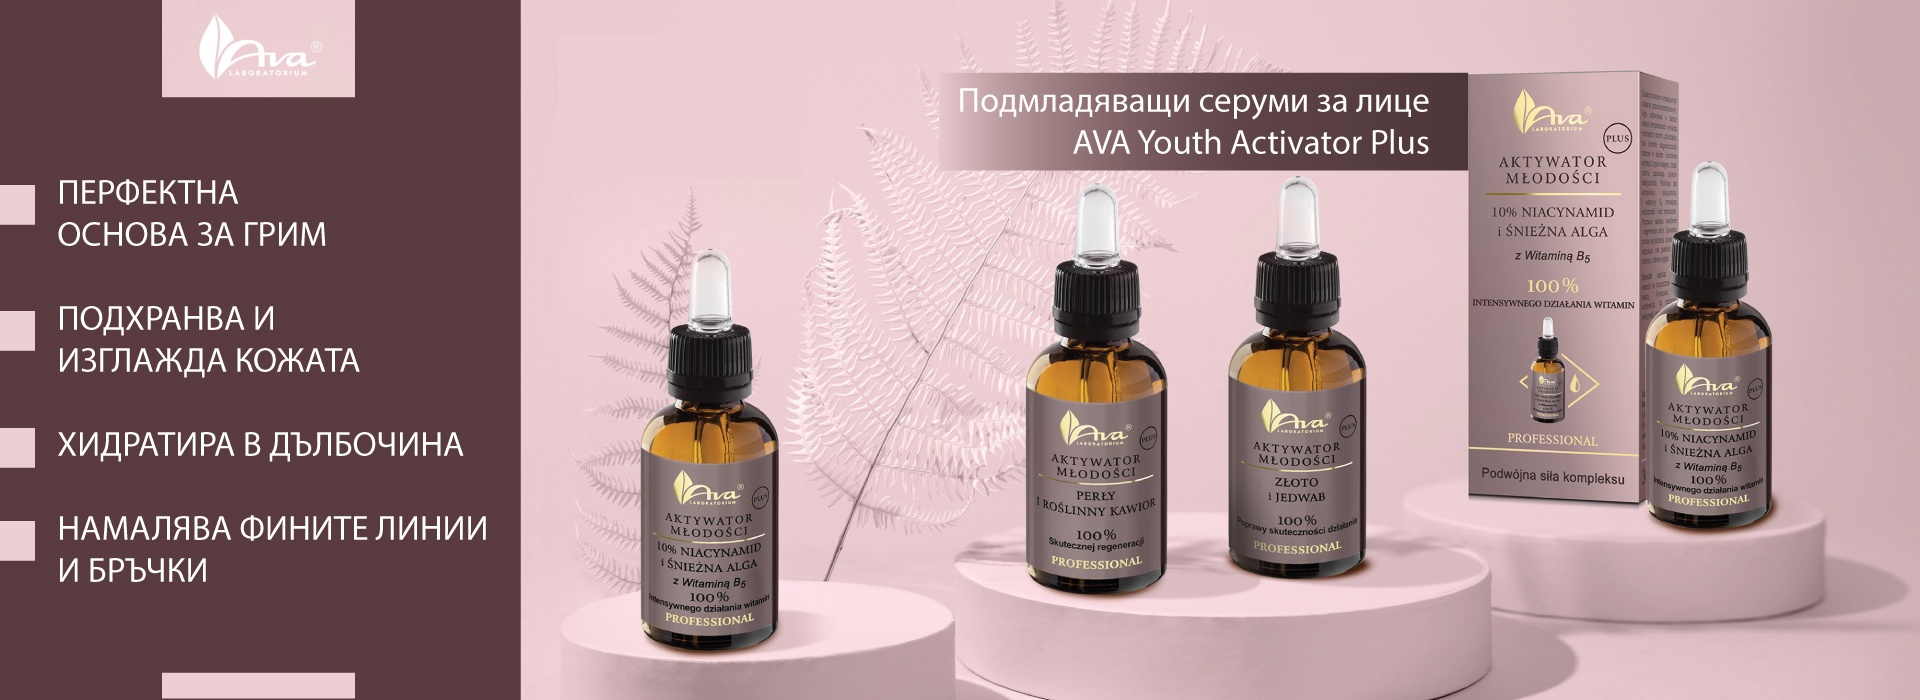 AVA Youth Activators Plus